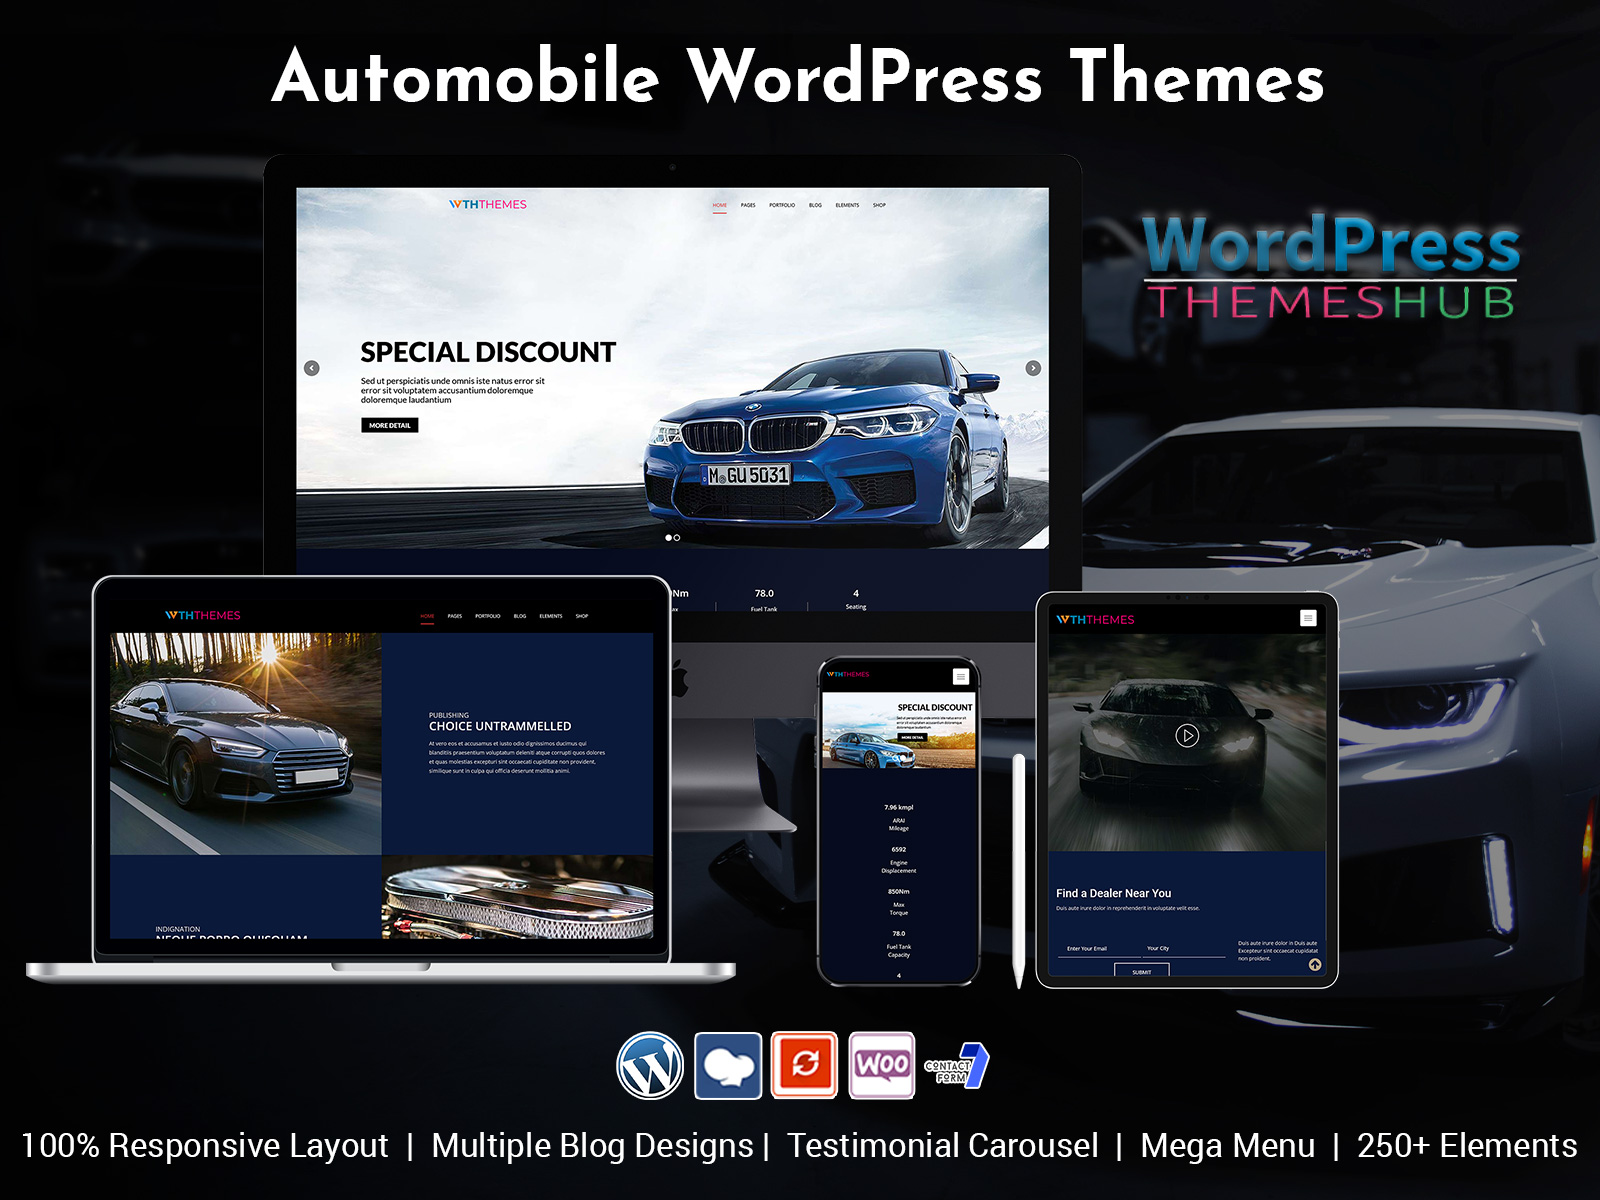 Automobile WordPress Theme To Make Car Website